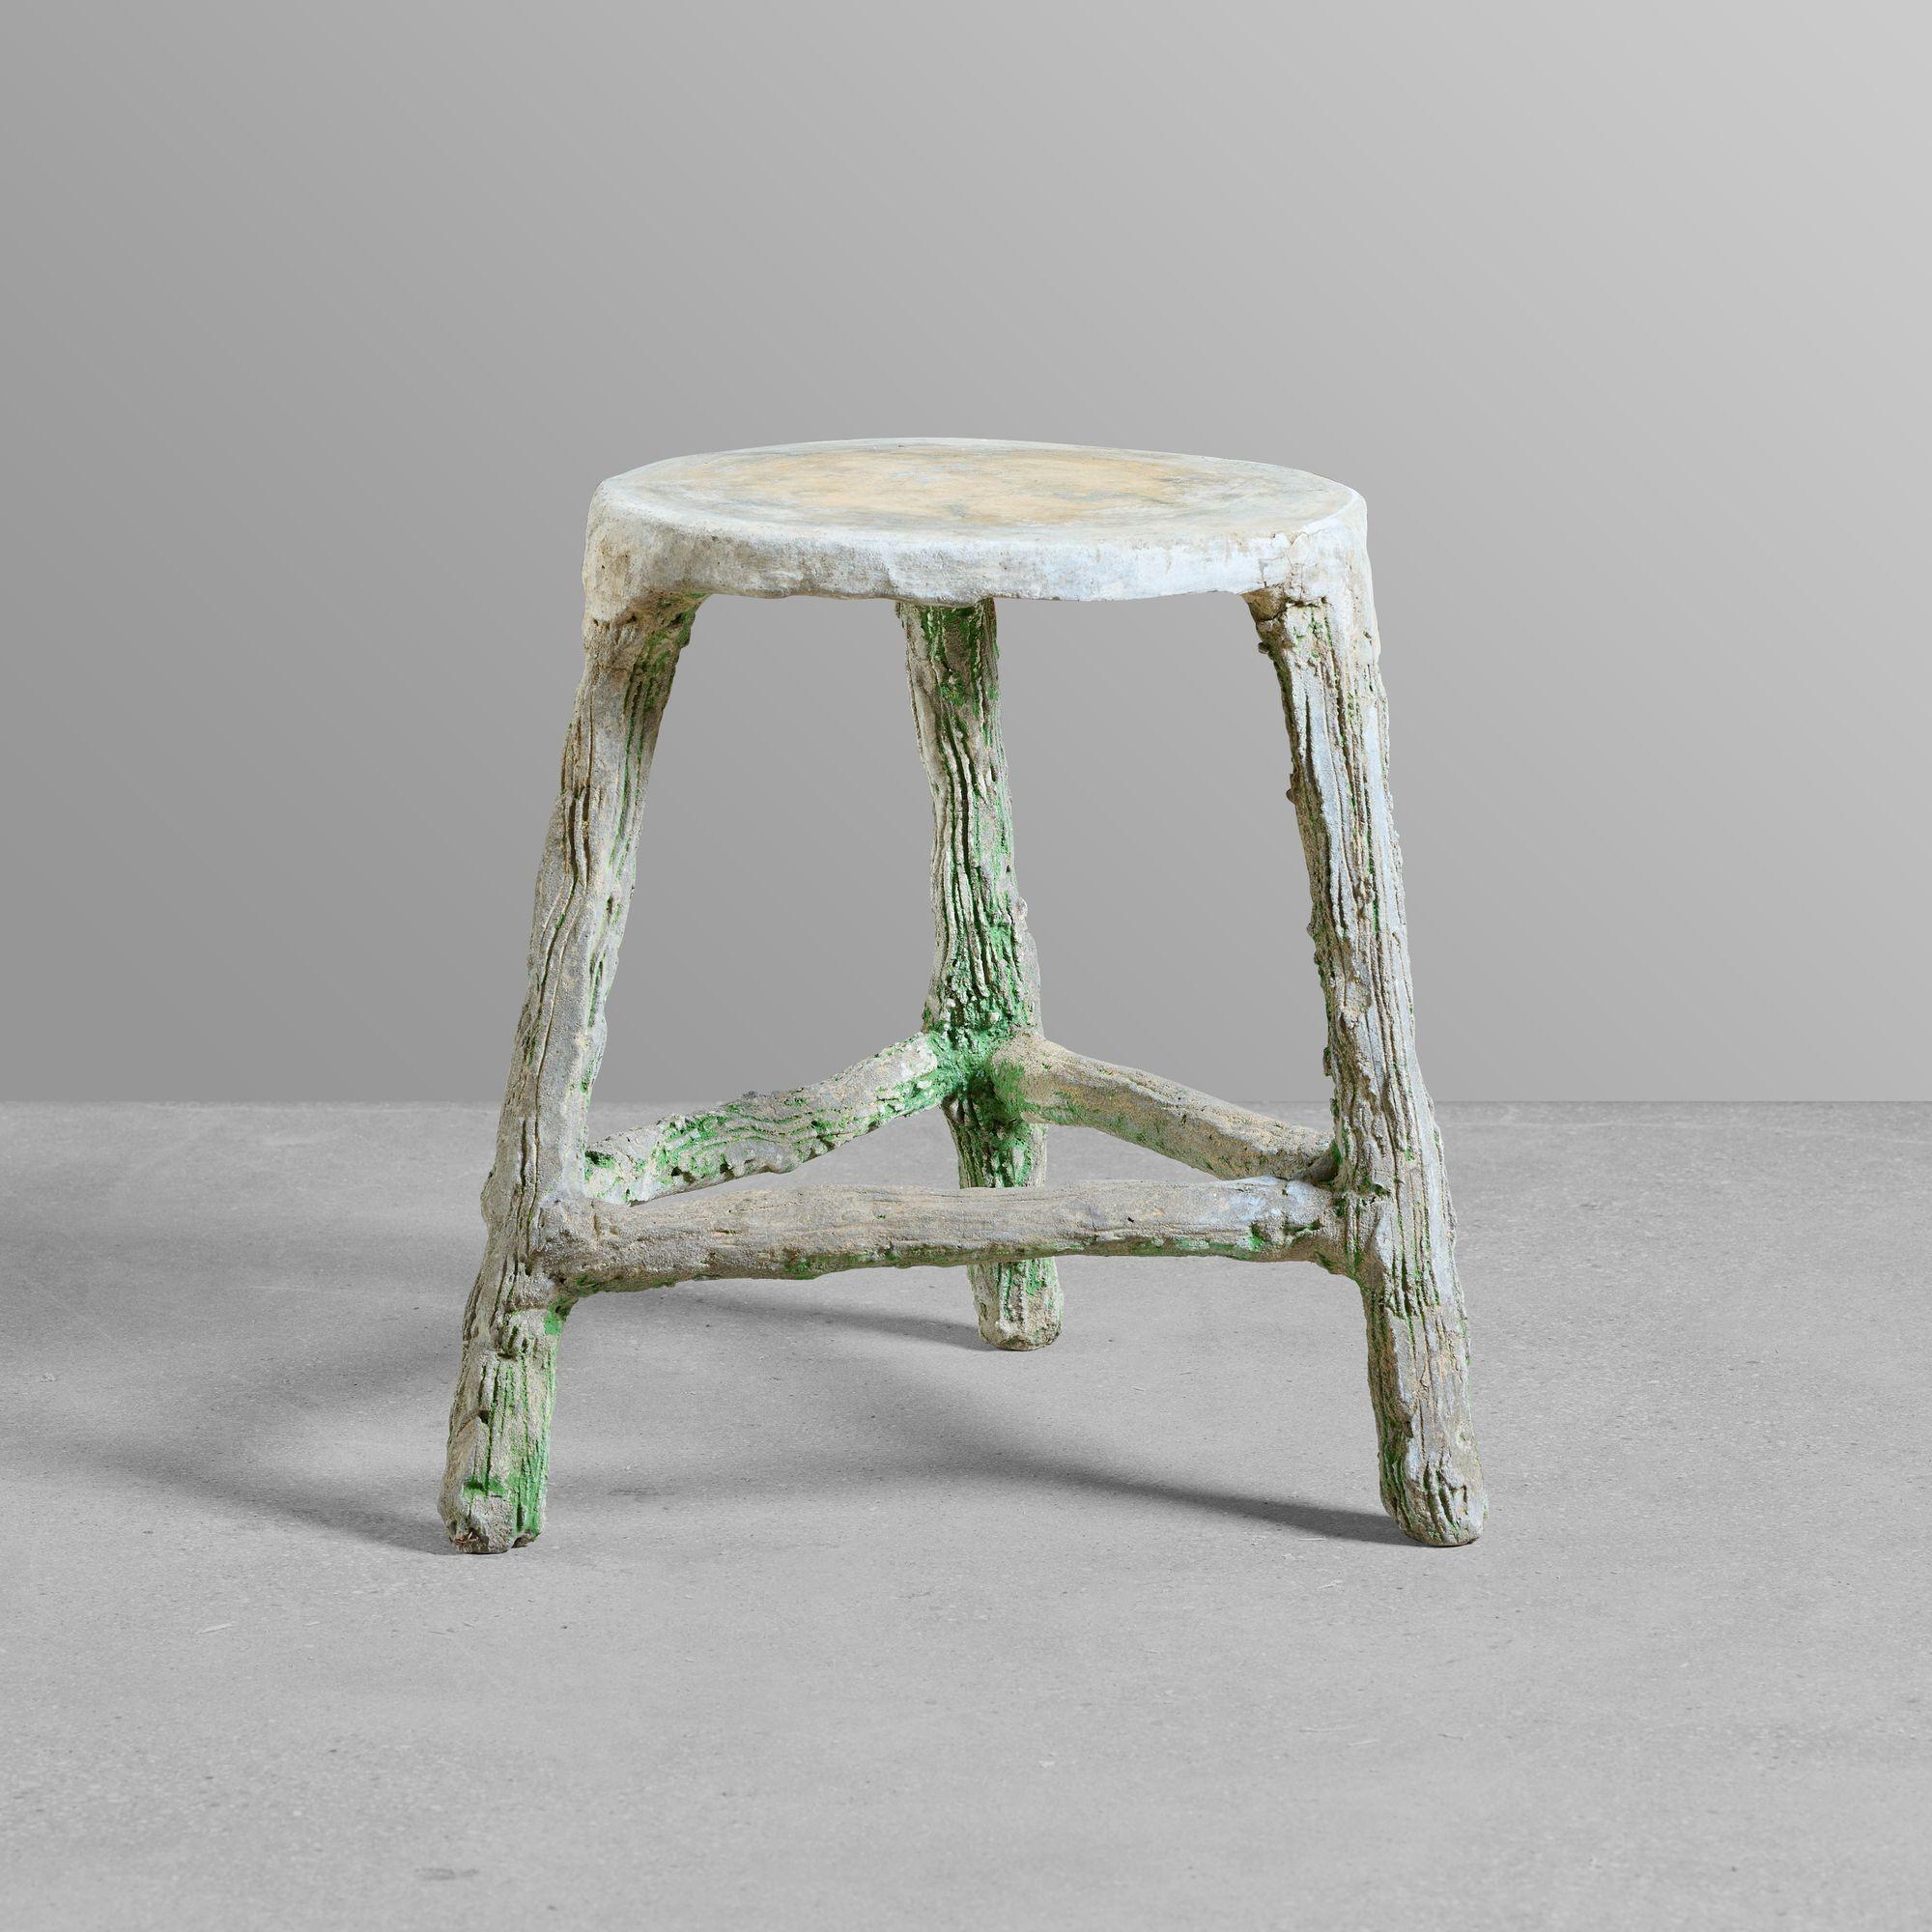 Faux bois three legged stool or side table.

